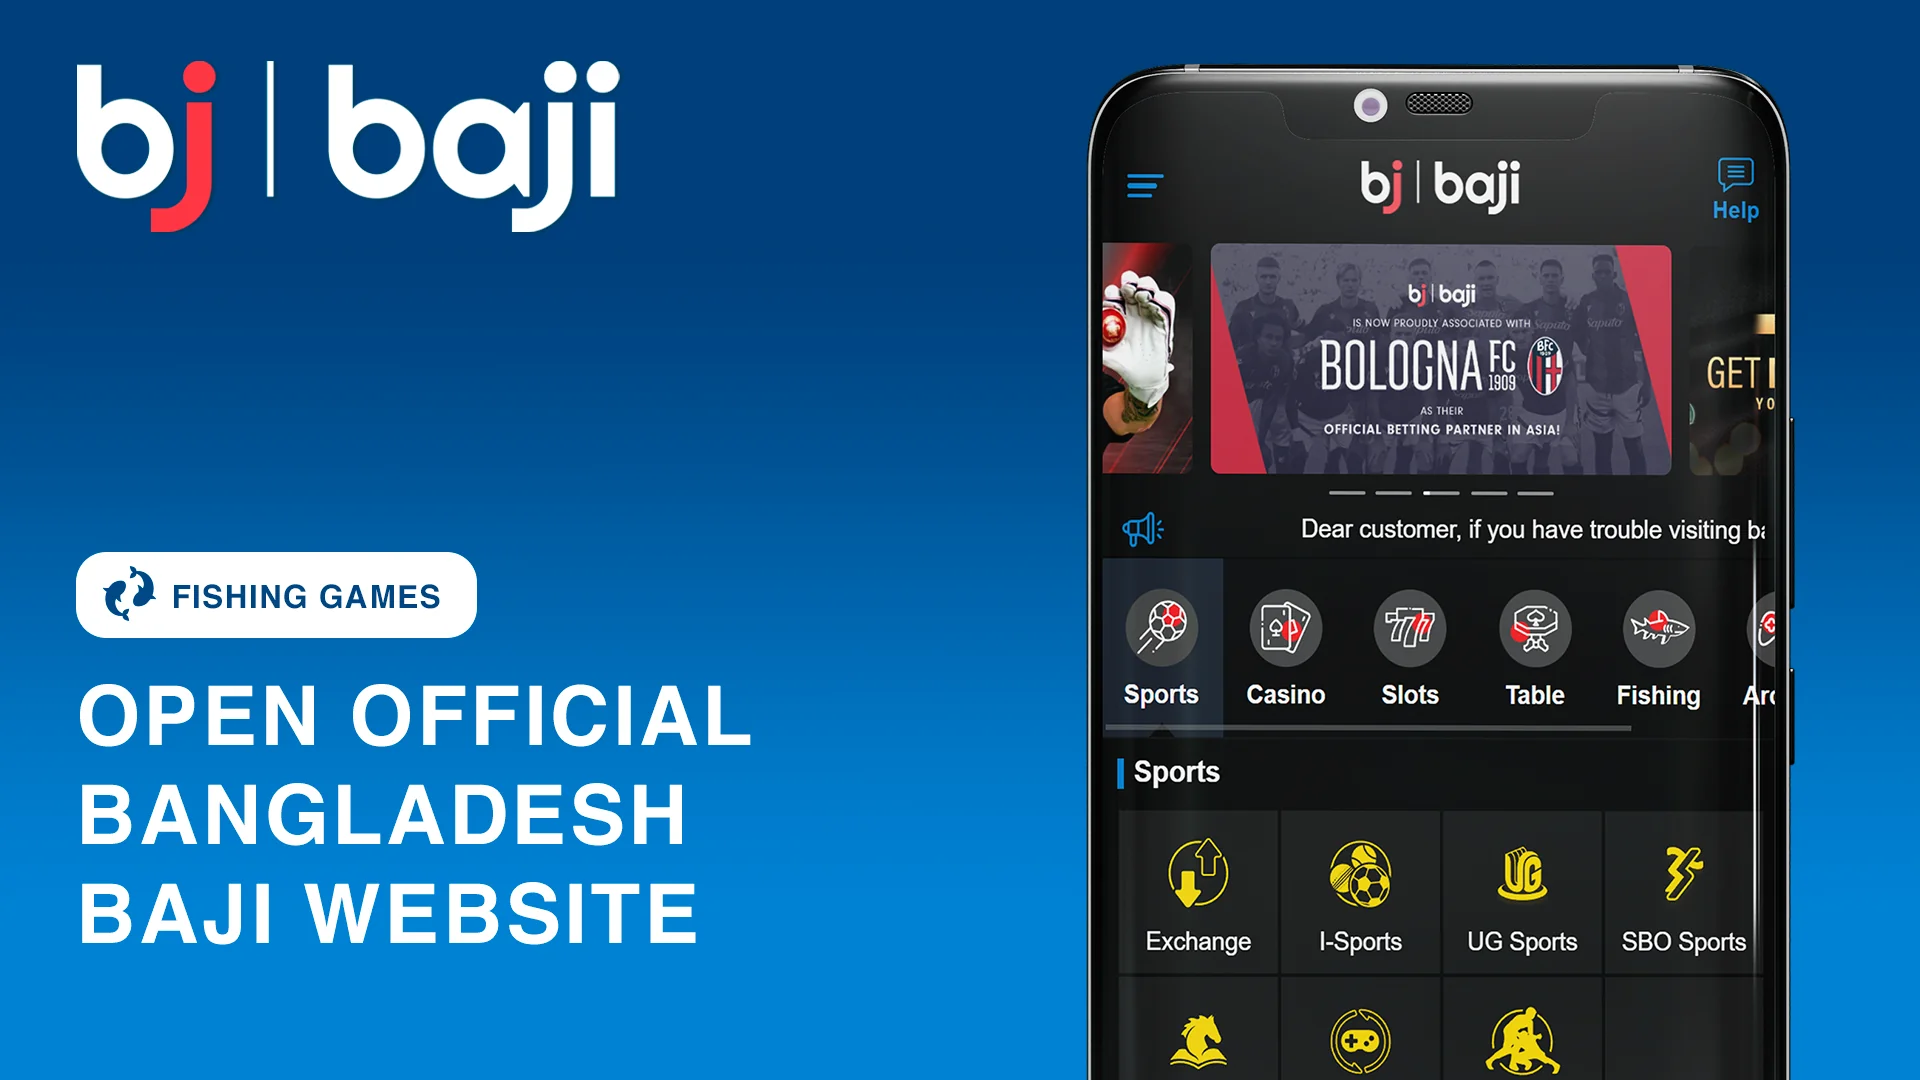 Open Official Baji Bangladesh Website to start playing Fishing Games